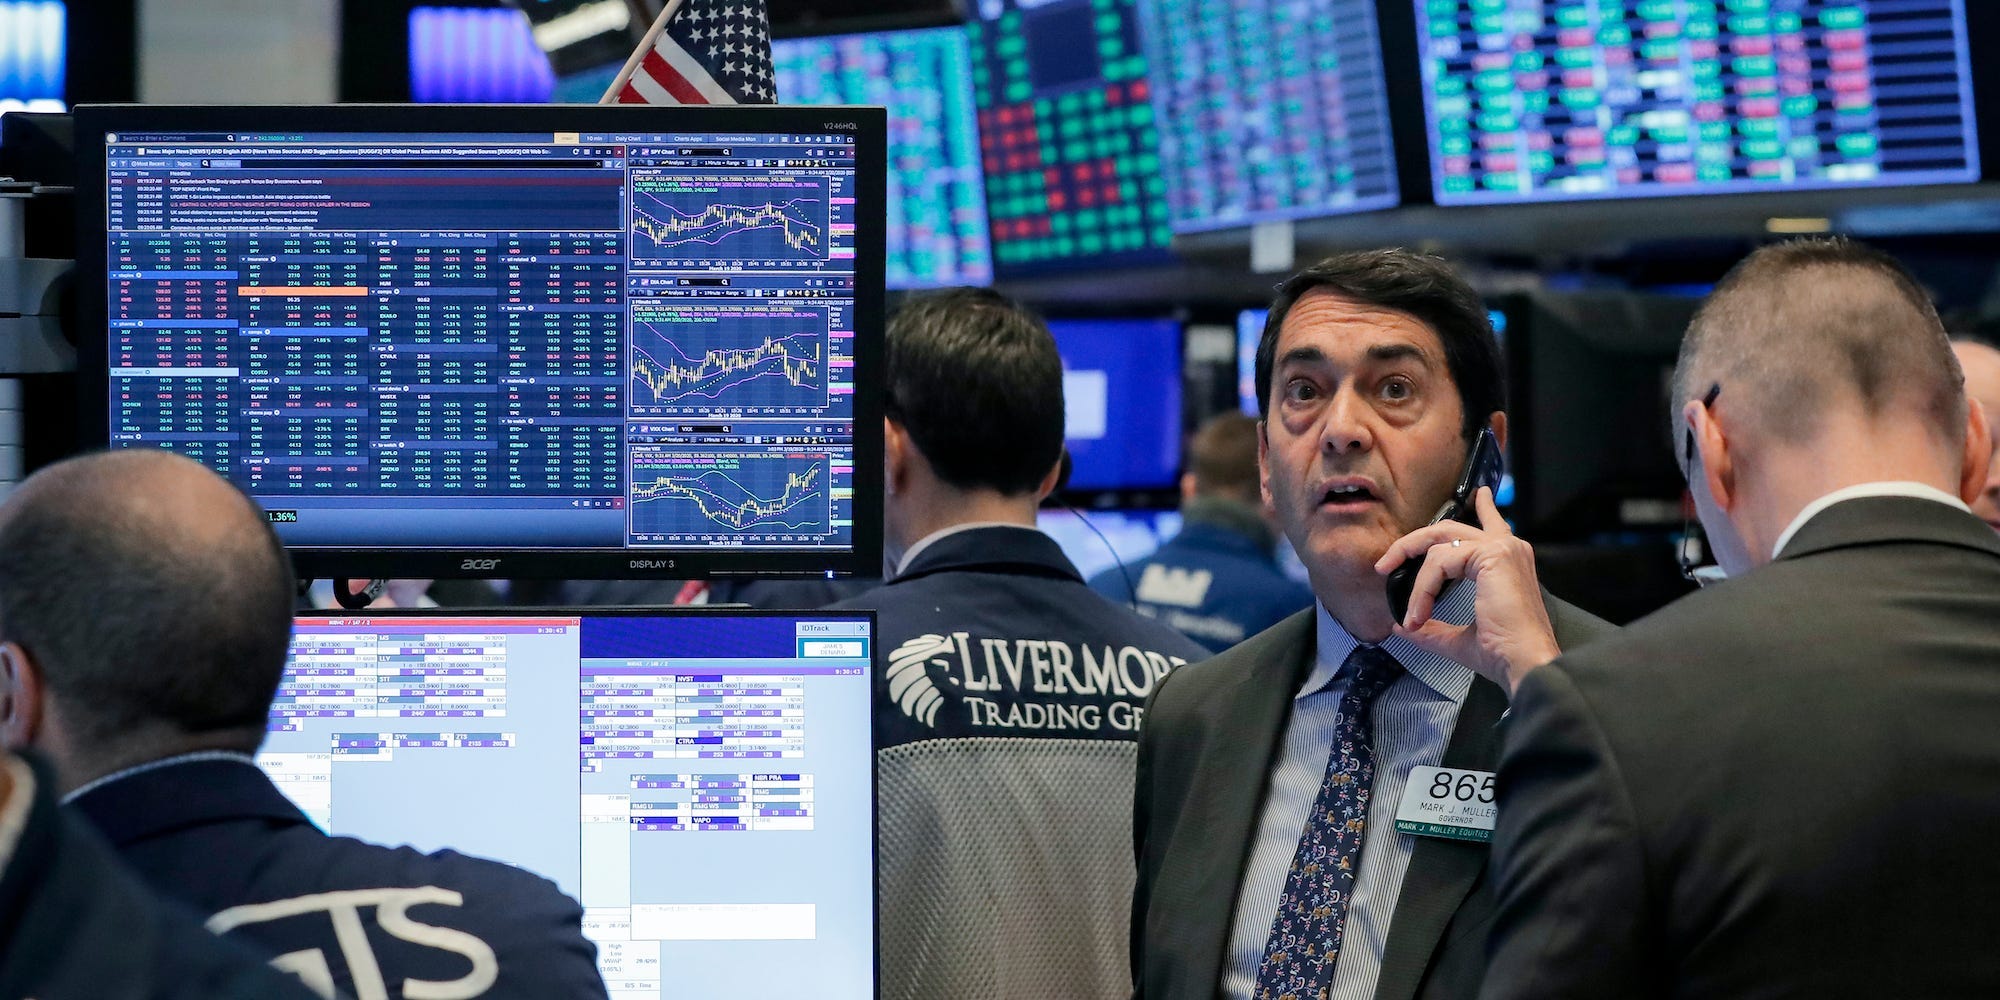 NYSE Trader surprised